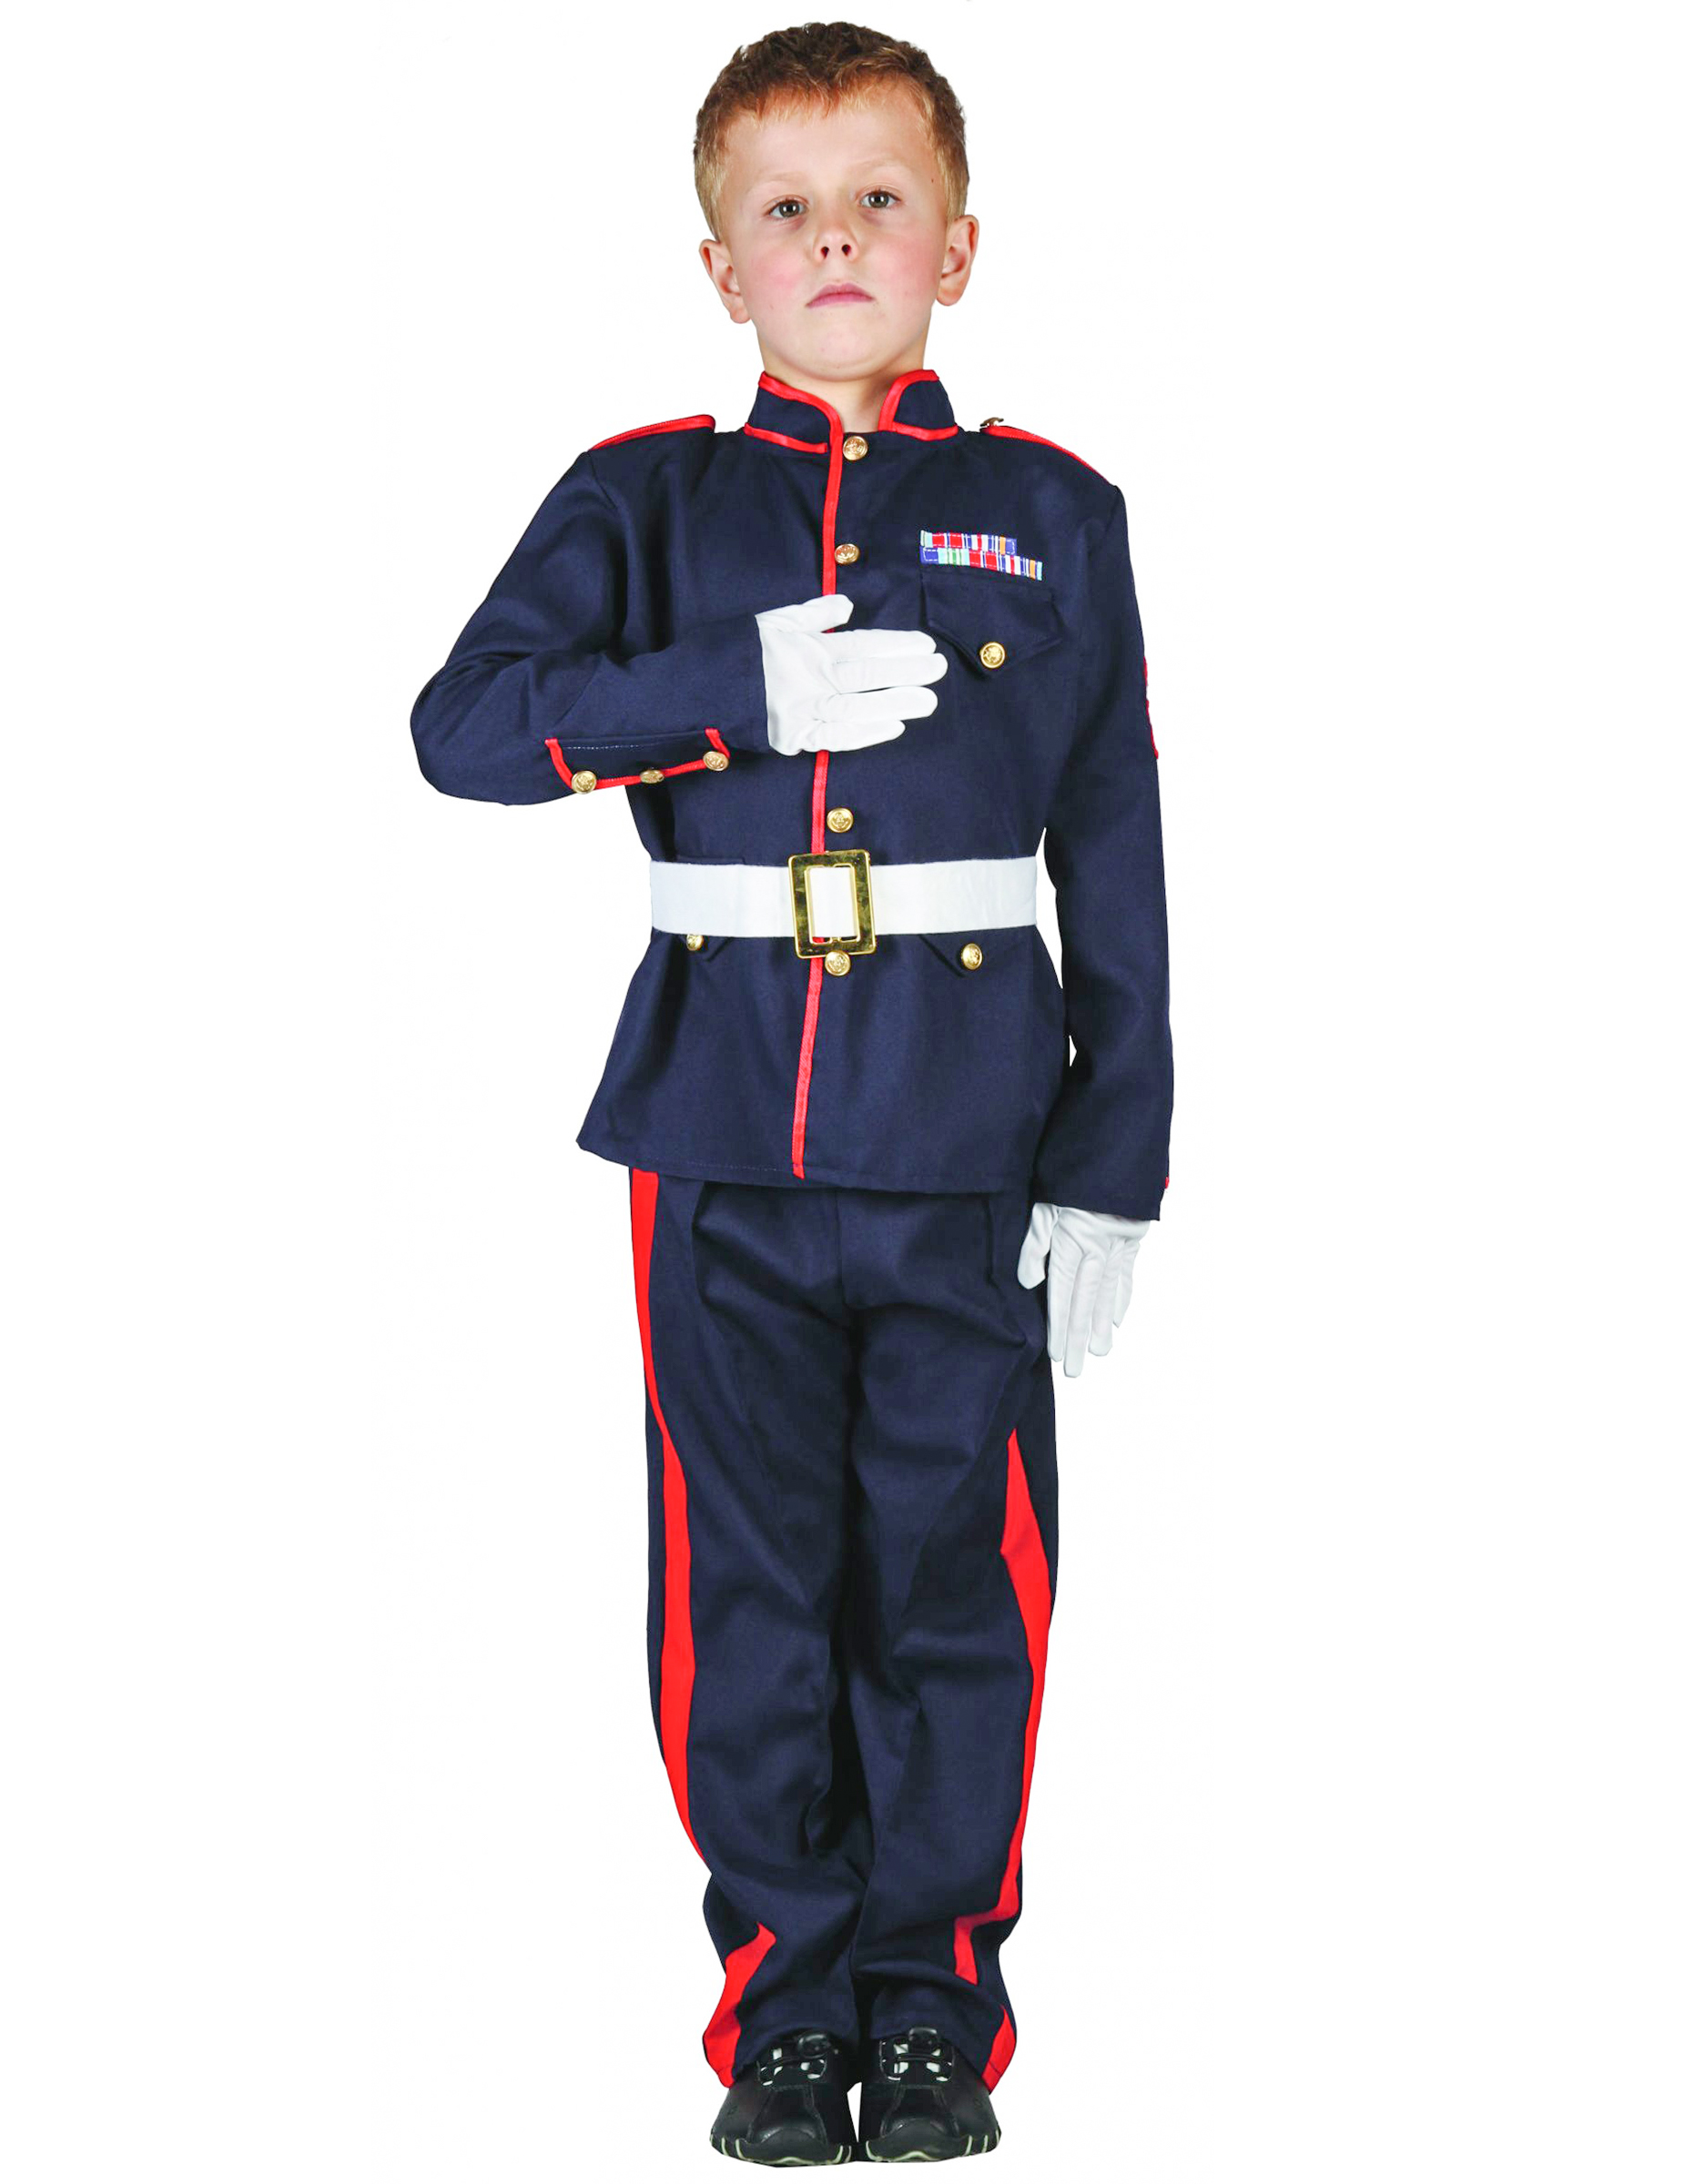 Soldat Kinder-Kostüm blau-rot von KARNEVAL-MEGASTORE